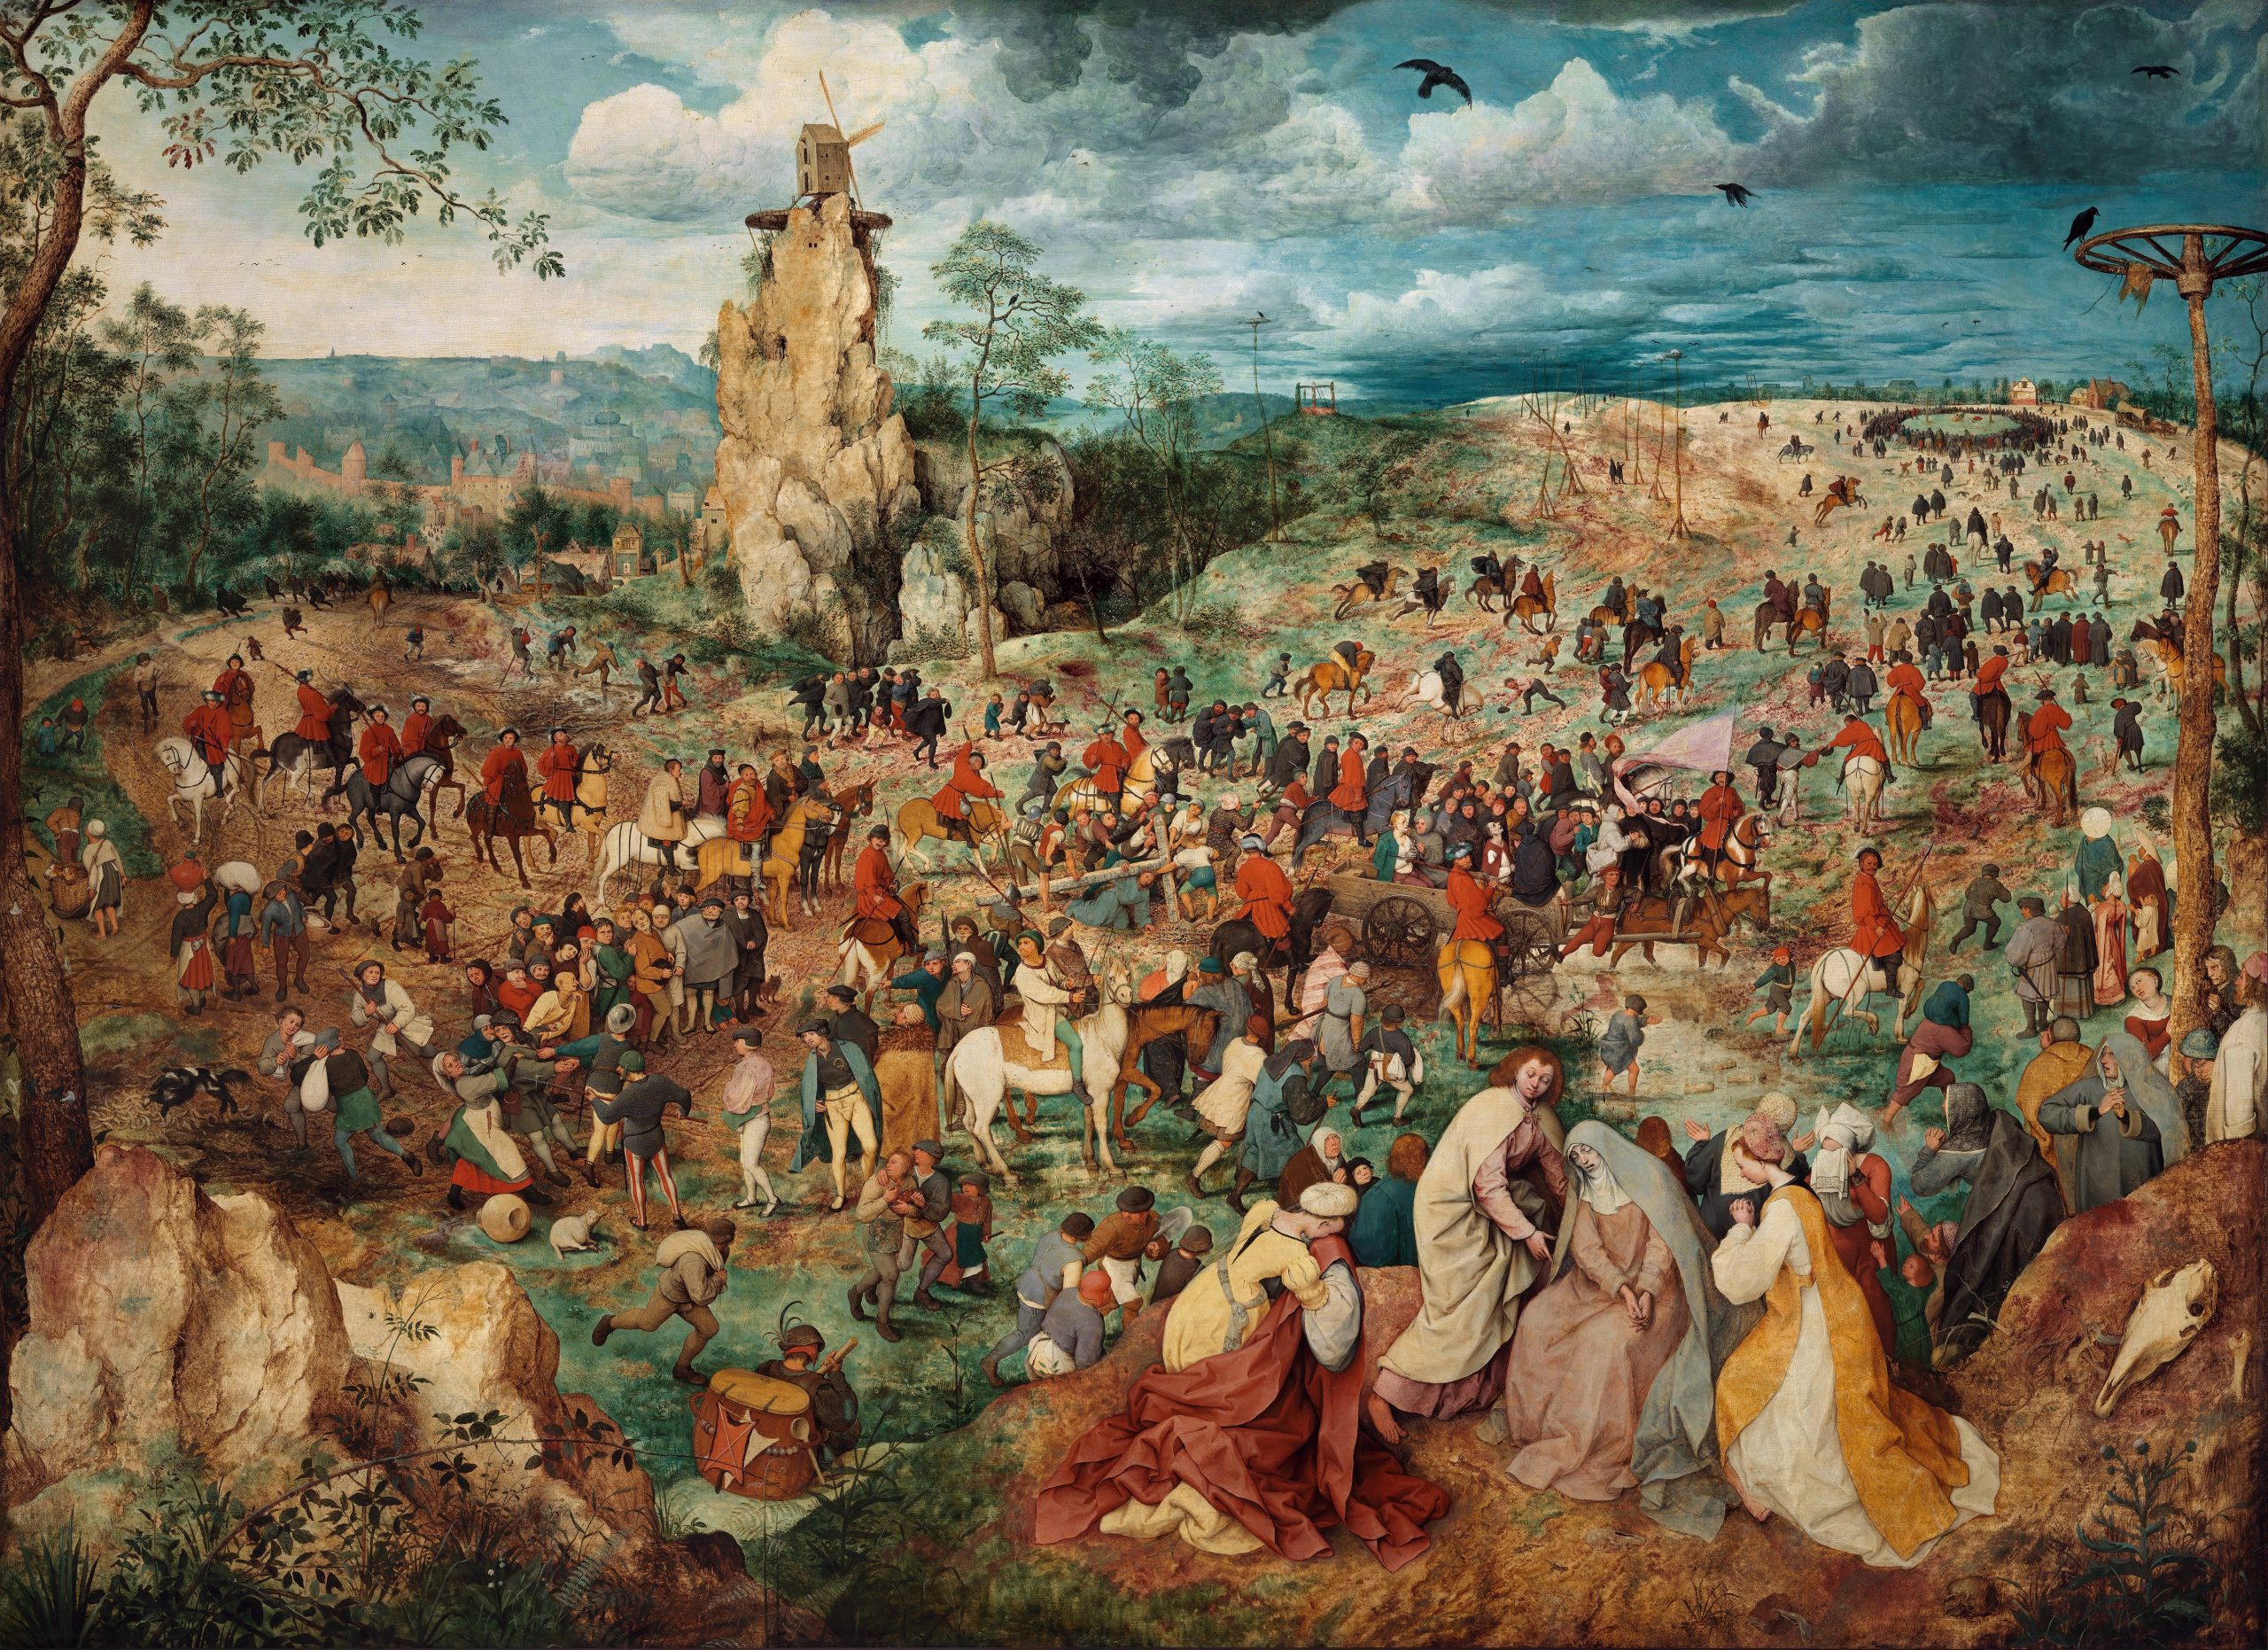 Pieter Bruegel the Elder
The Procession to Calvary, 1564
Kunsthistorisches Museum, Vienna